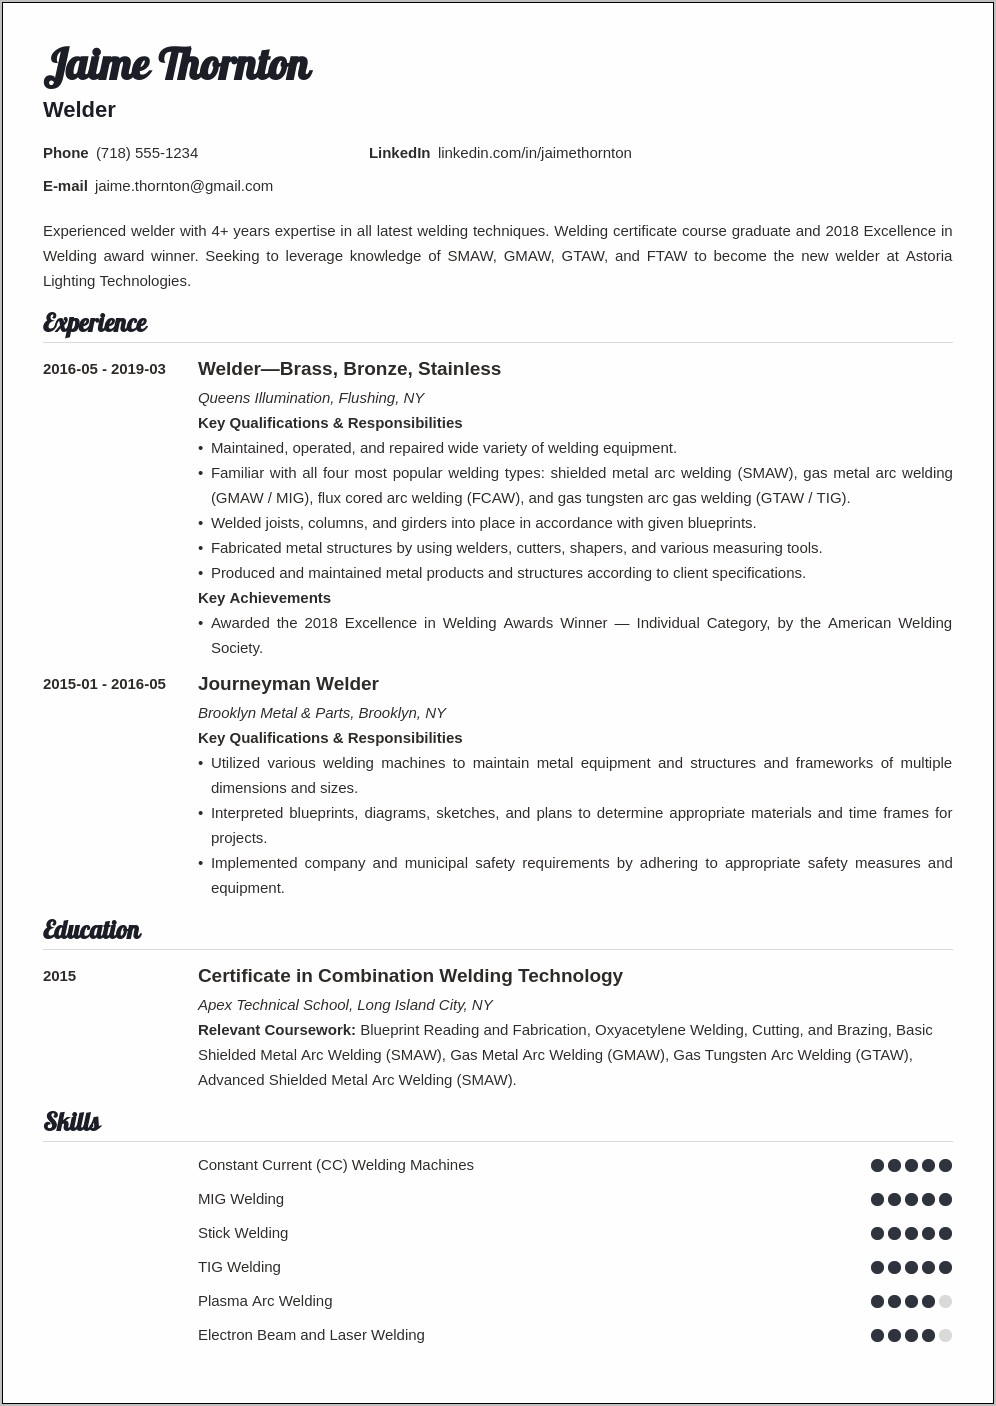 Resume Summary Examples For Welders